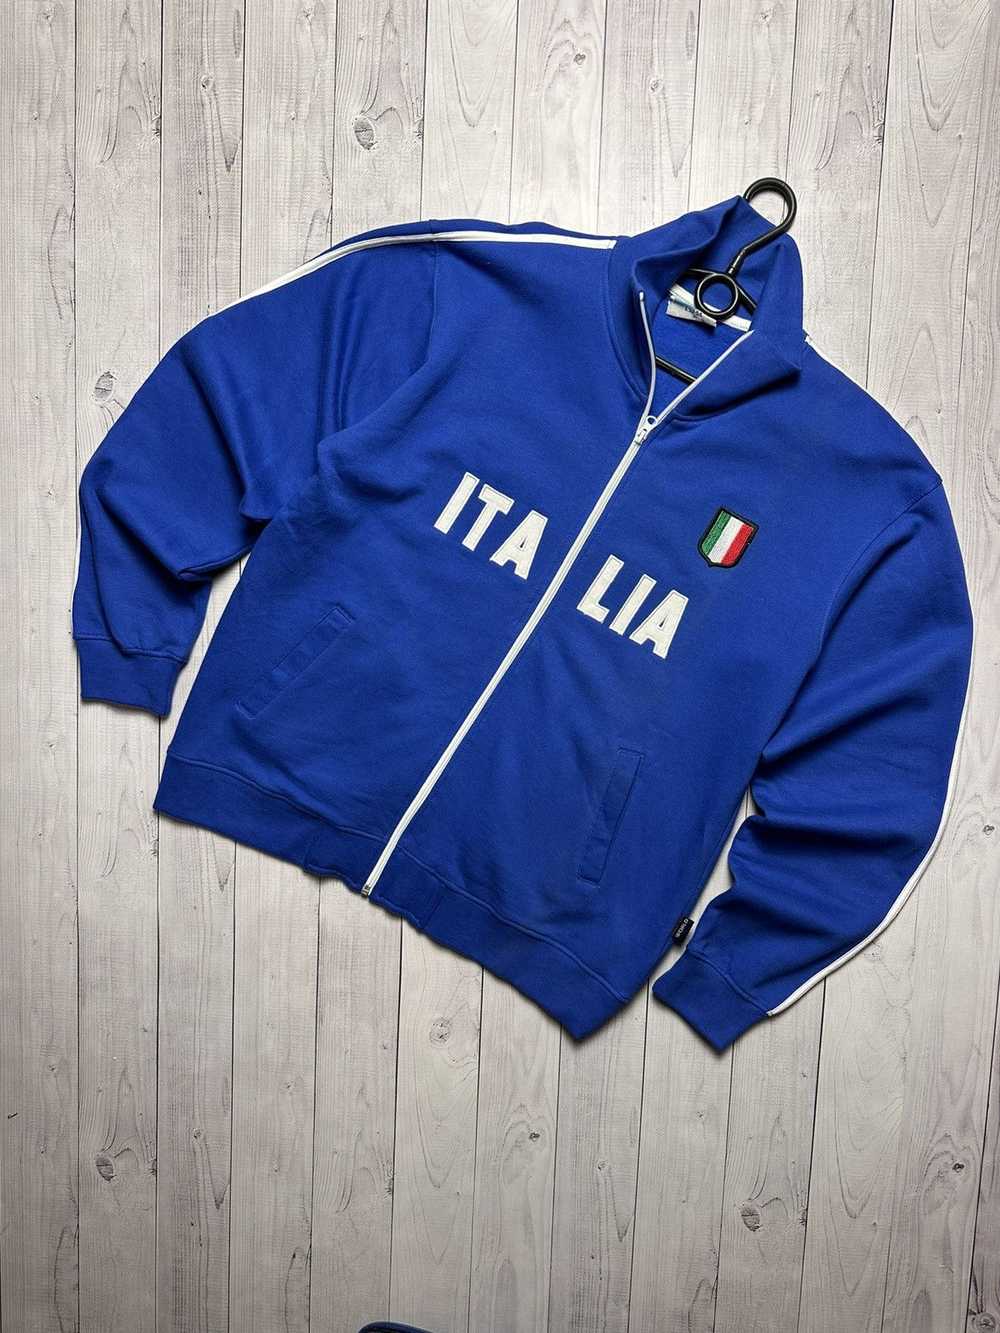 Soccer Jersey × Streetwear × Vintage Vintage Ital… - image 1